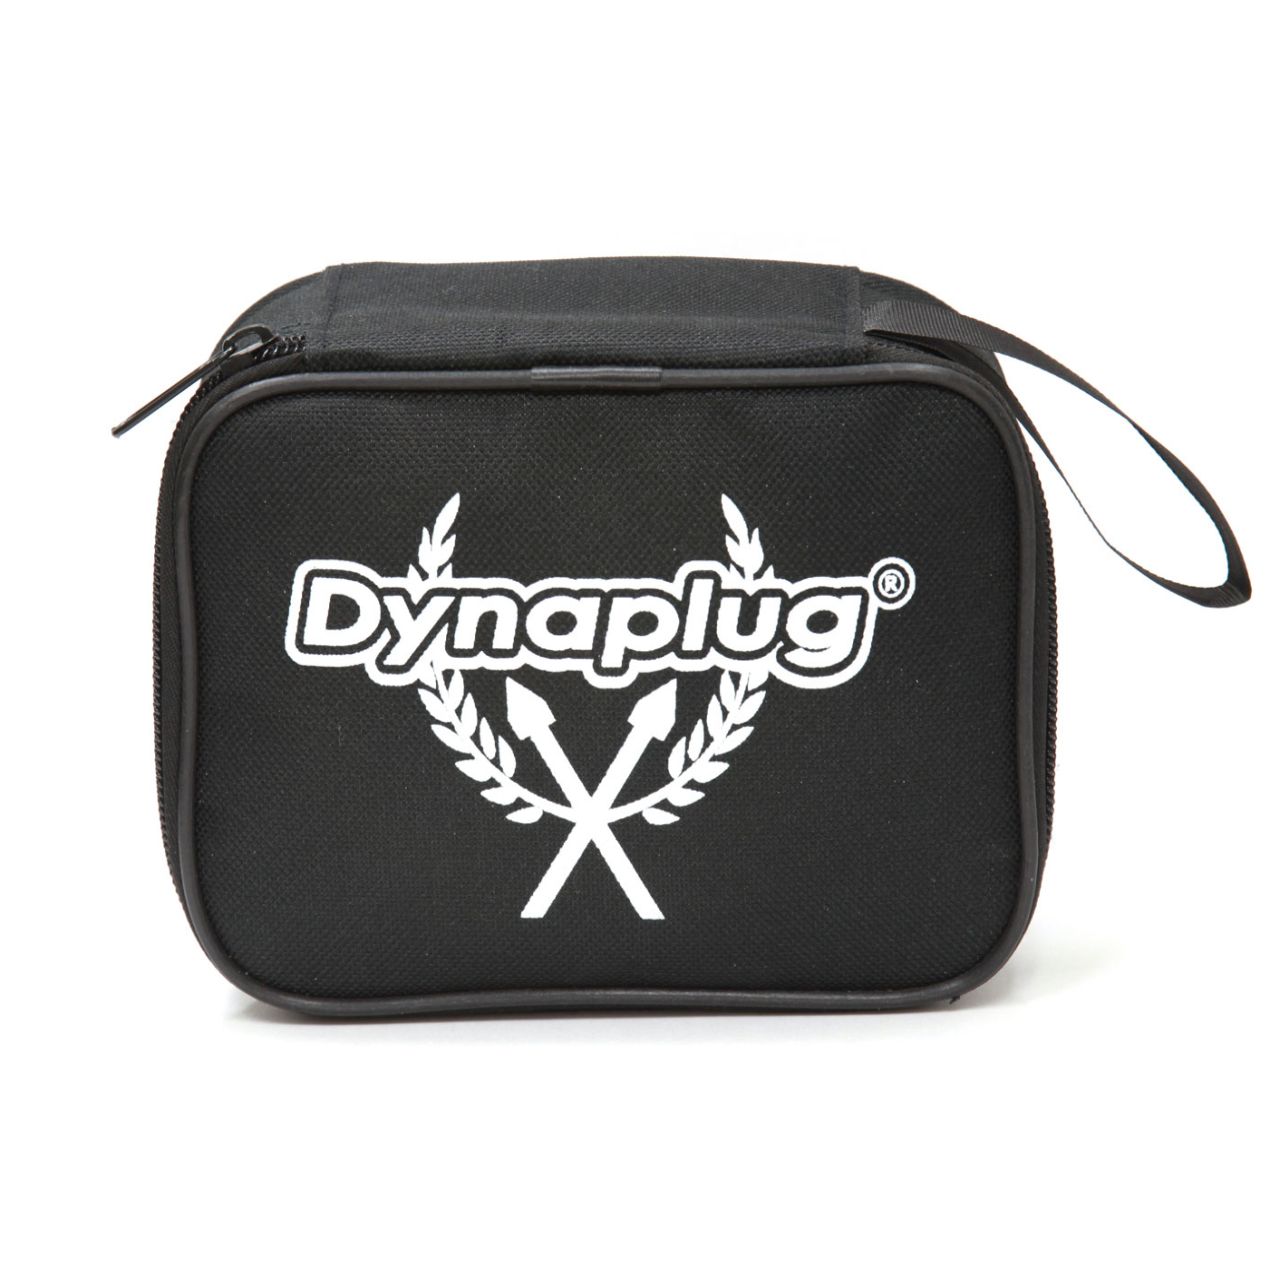 Dynaplug Nylon Storage Bag